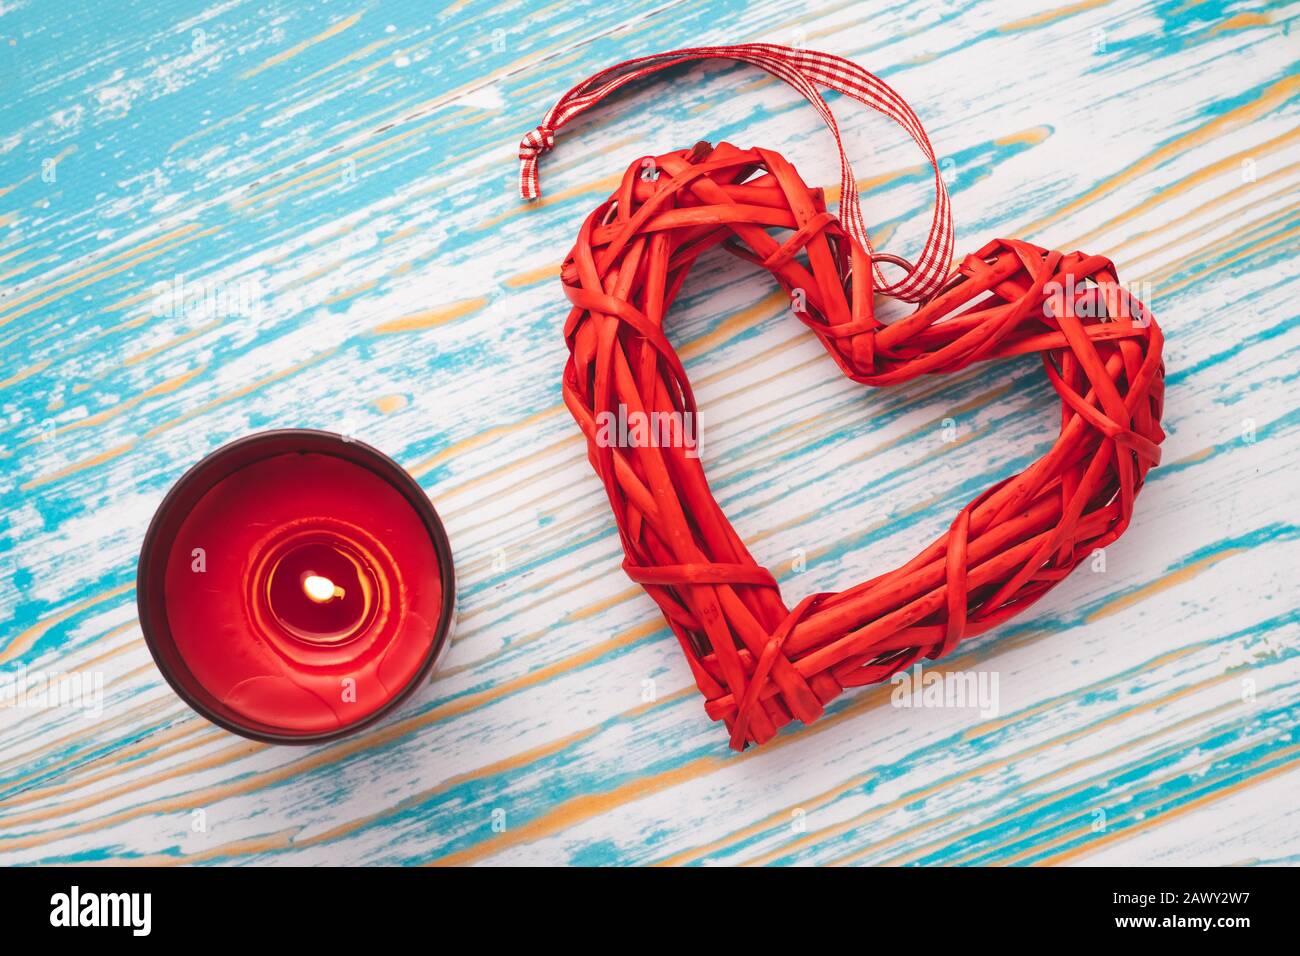 Burning Red Heart Shaped Candle Stock Image - Image of glowing, harmony:  22848523